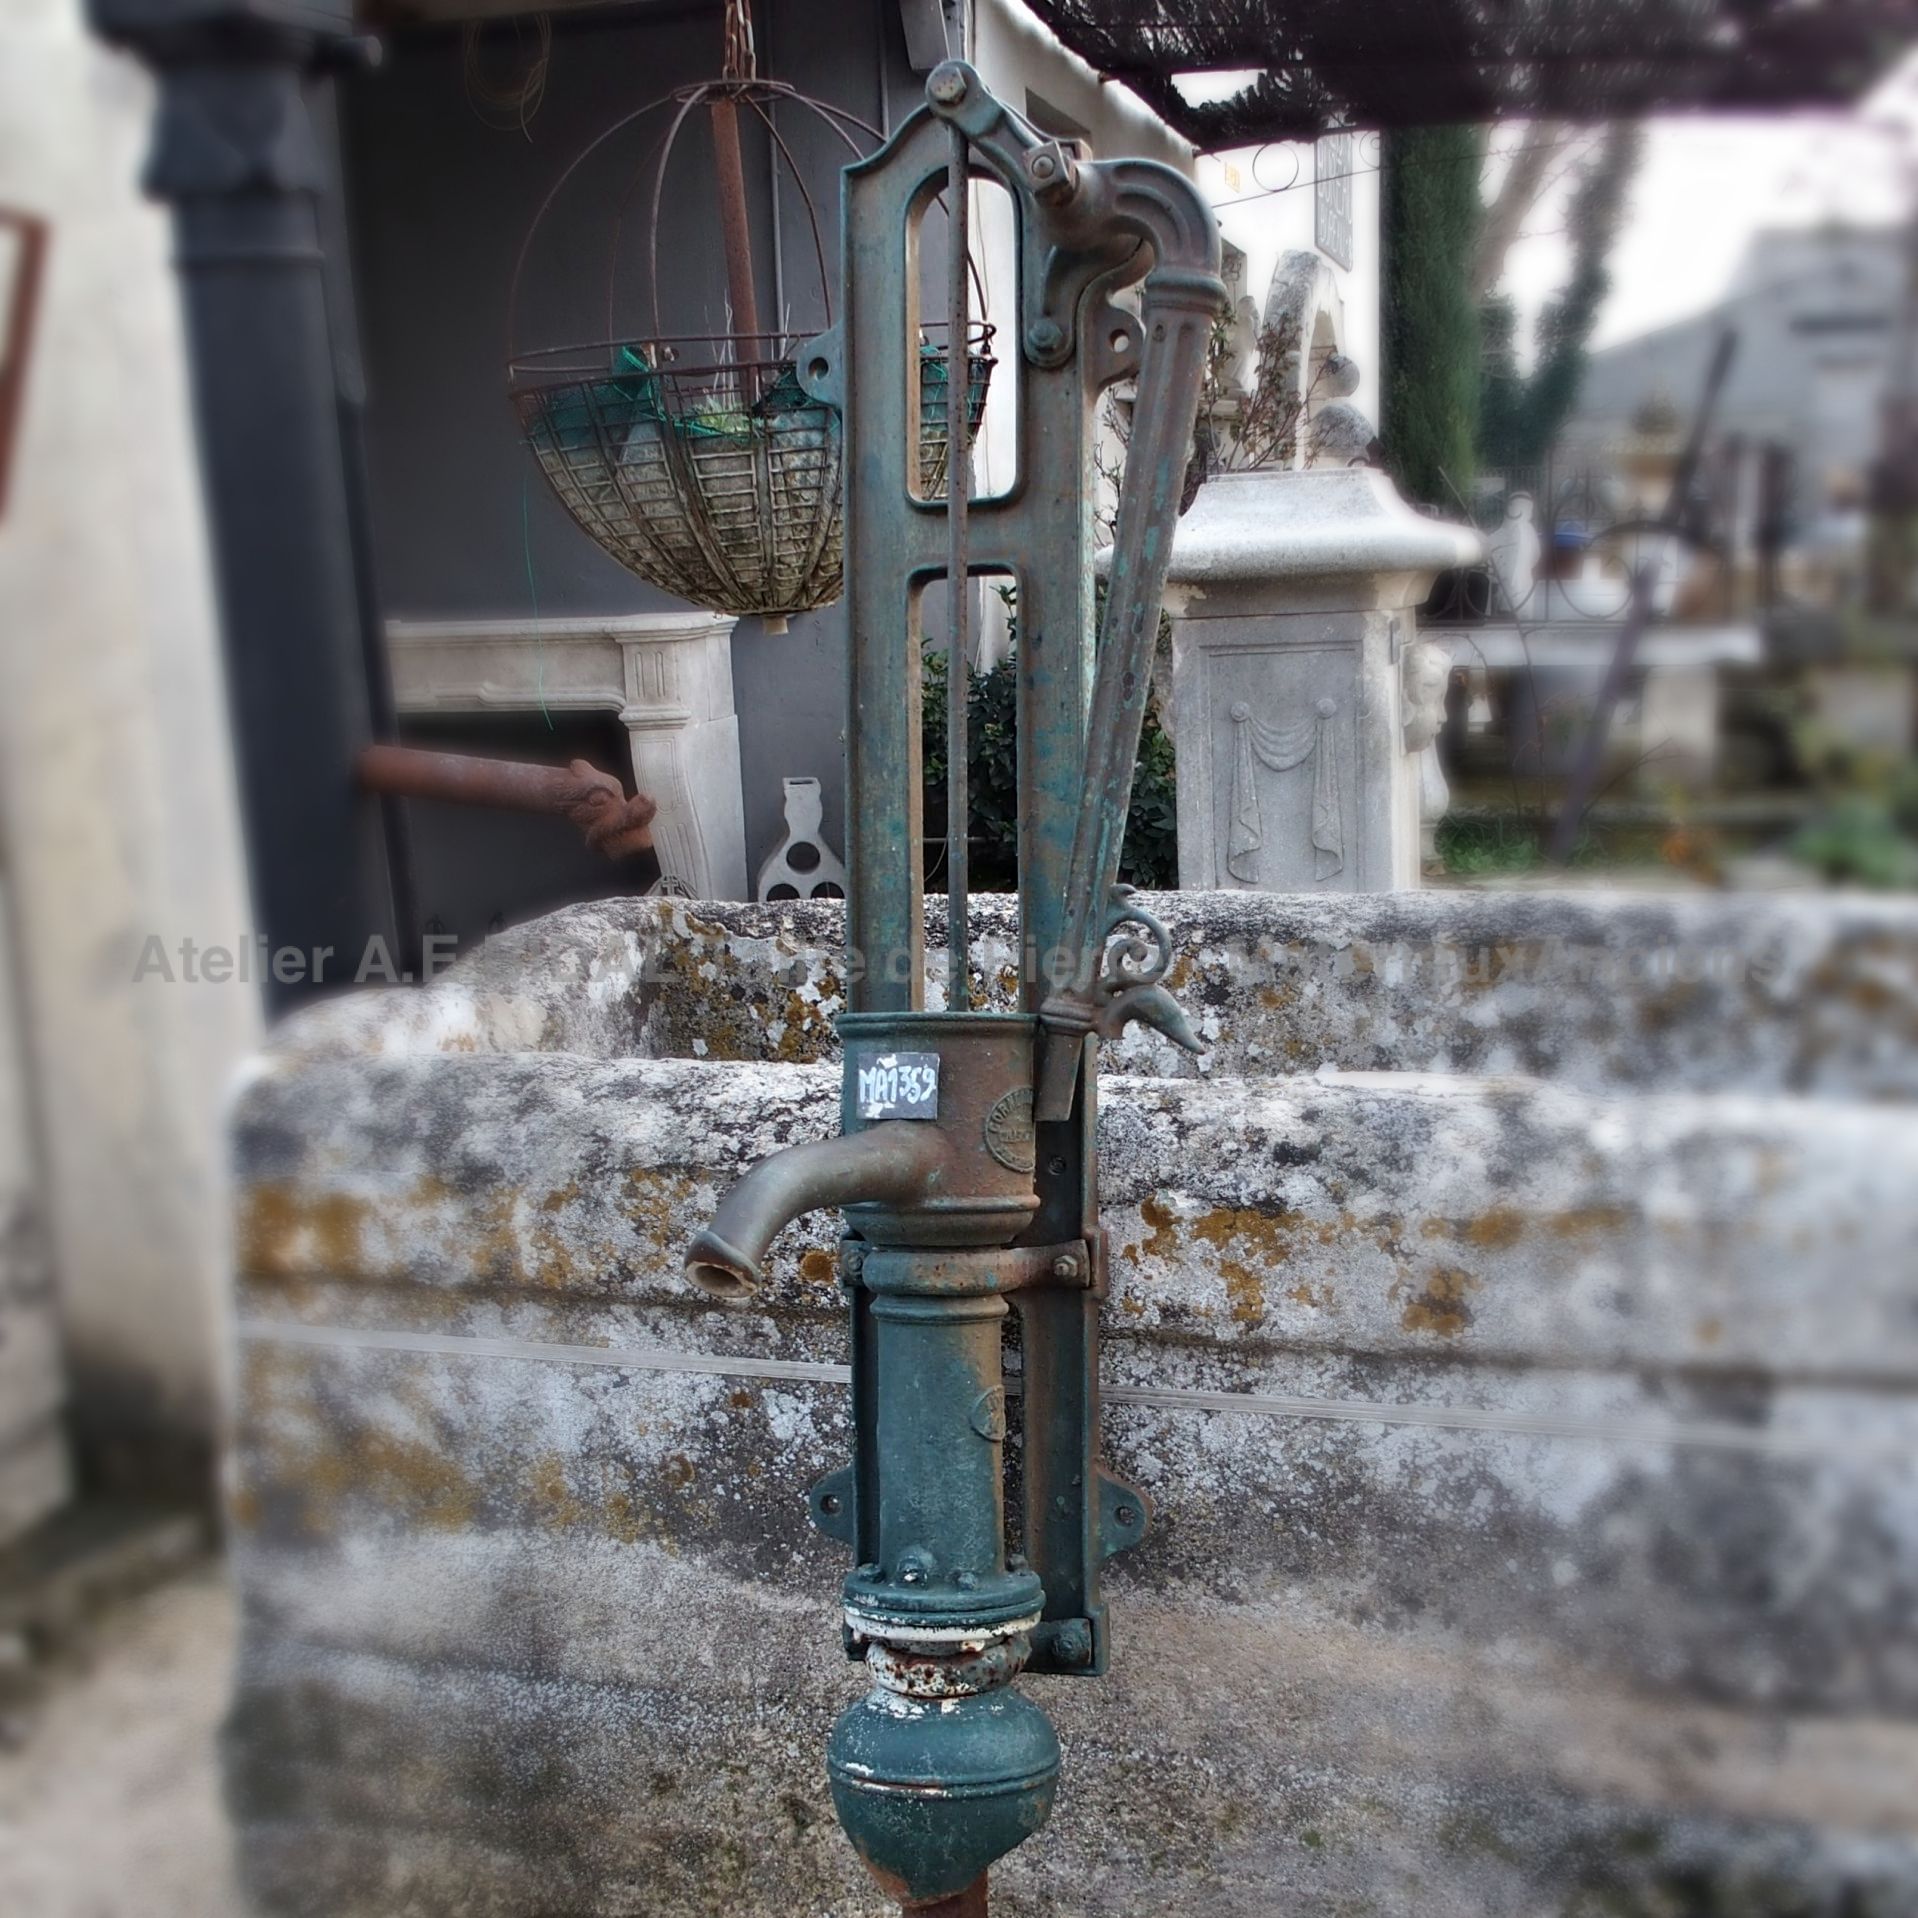 Beautiful large hand pump - beautiful old type of water pump.